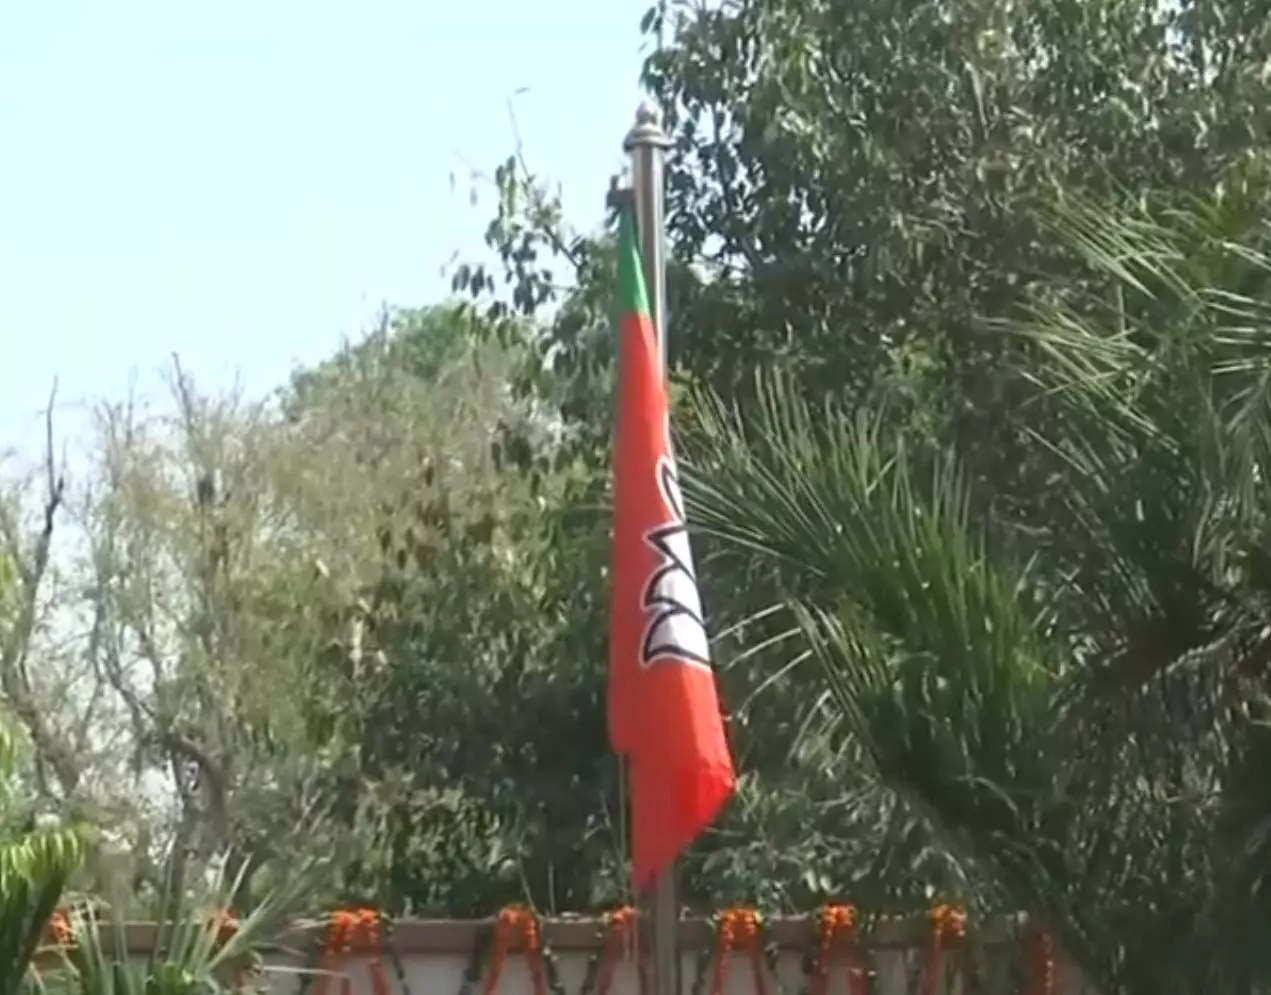 भाजपा स्थापना दिवस, राष्ट्रीय अध्यक्ष जे.पी. नड्डा ने बीजेपी मुख्यालय में पार्टी का झंडा फहराया